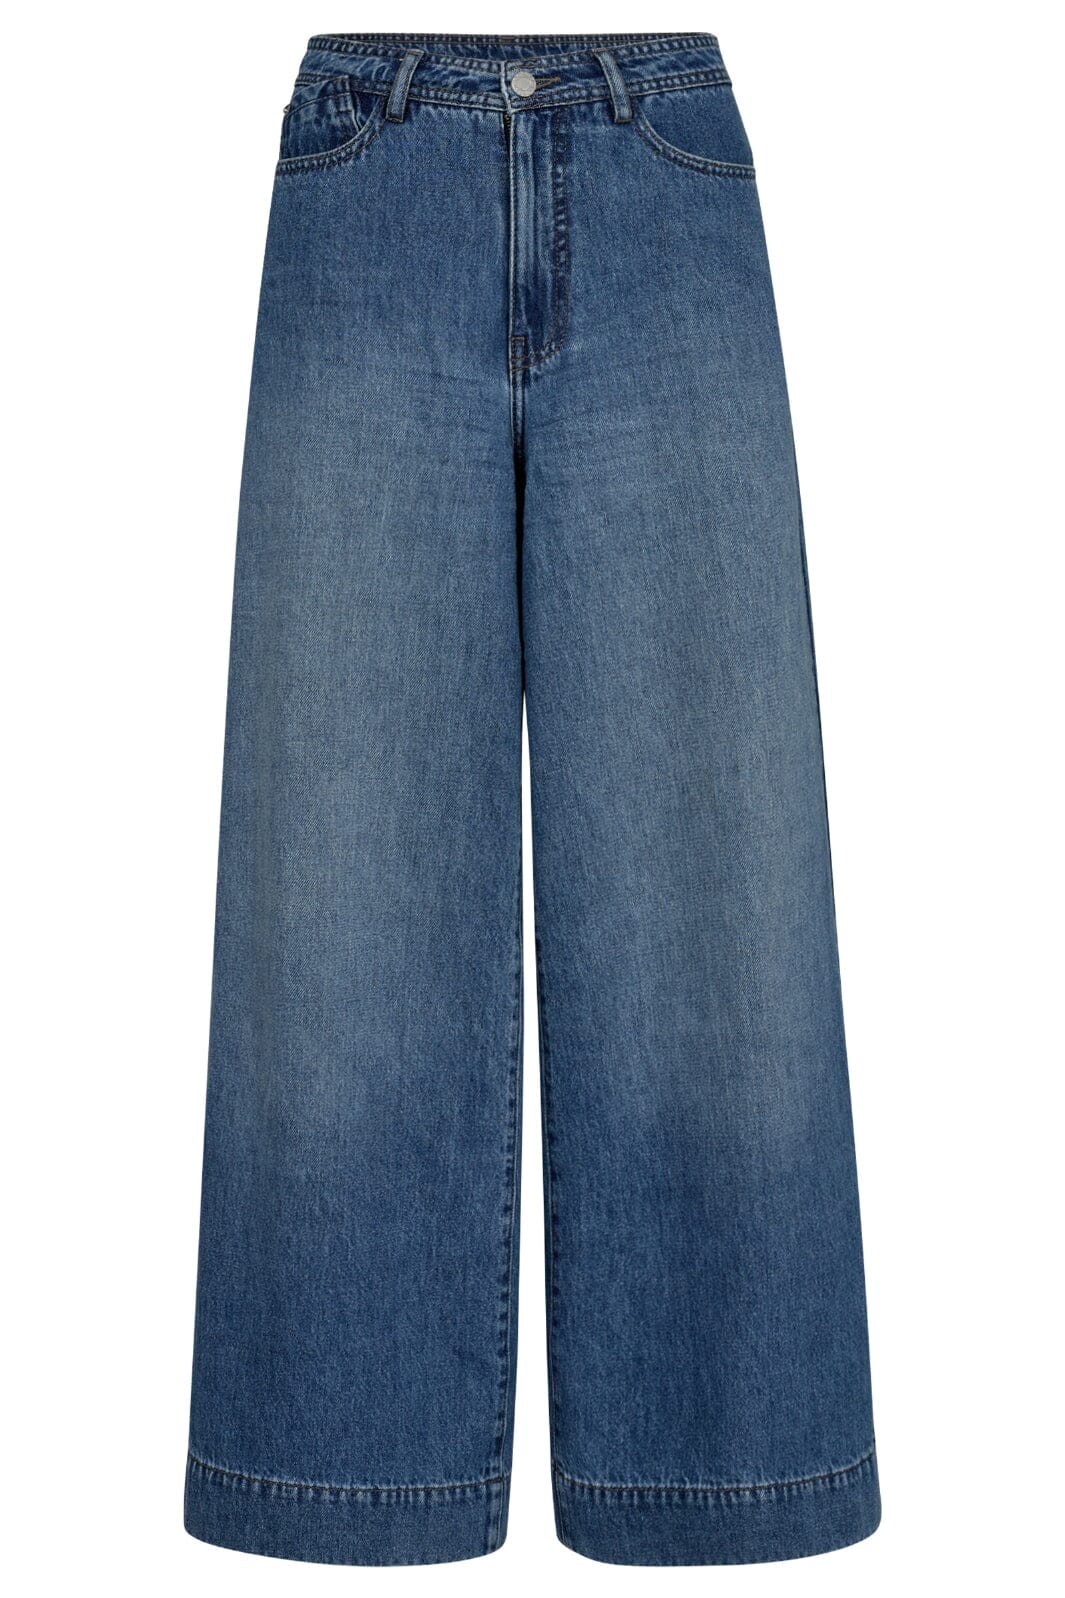 Gossia - Bostongo Jeans - Medium Blue Jeans 